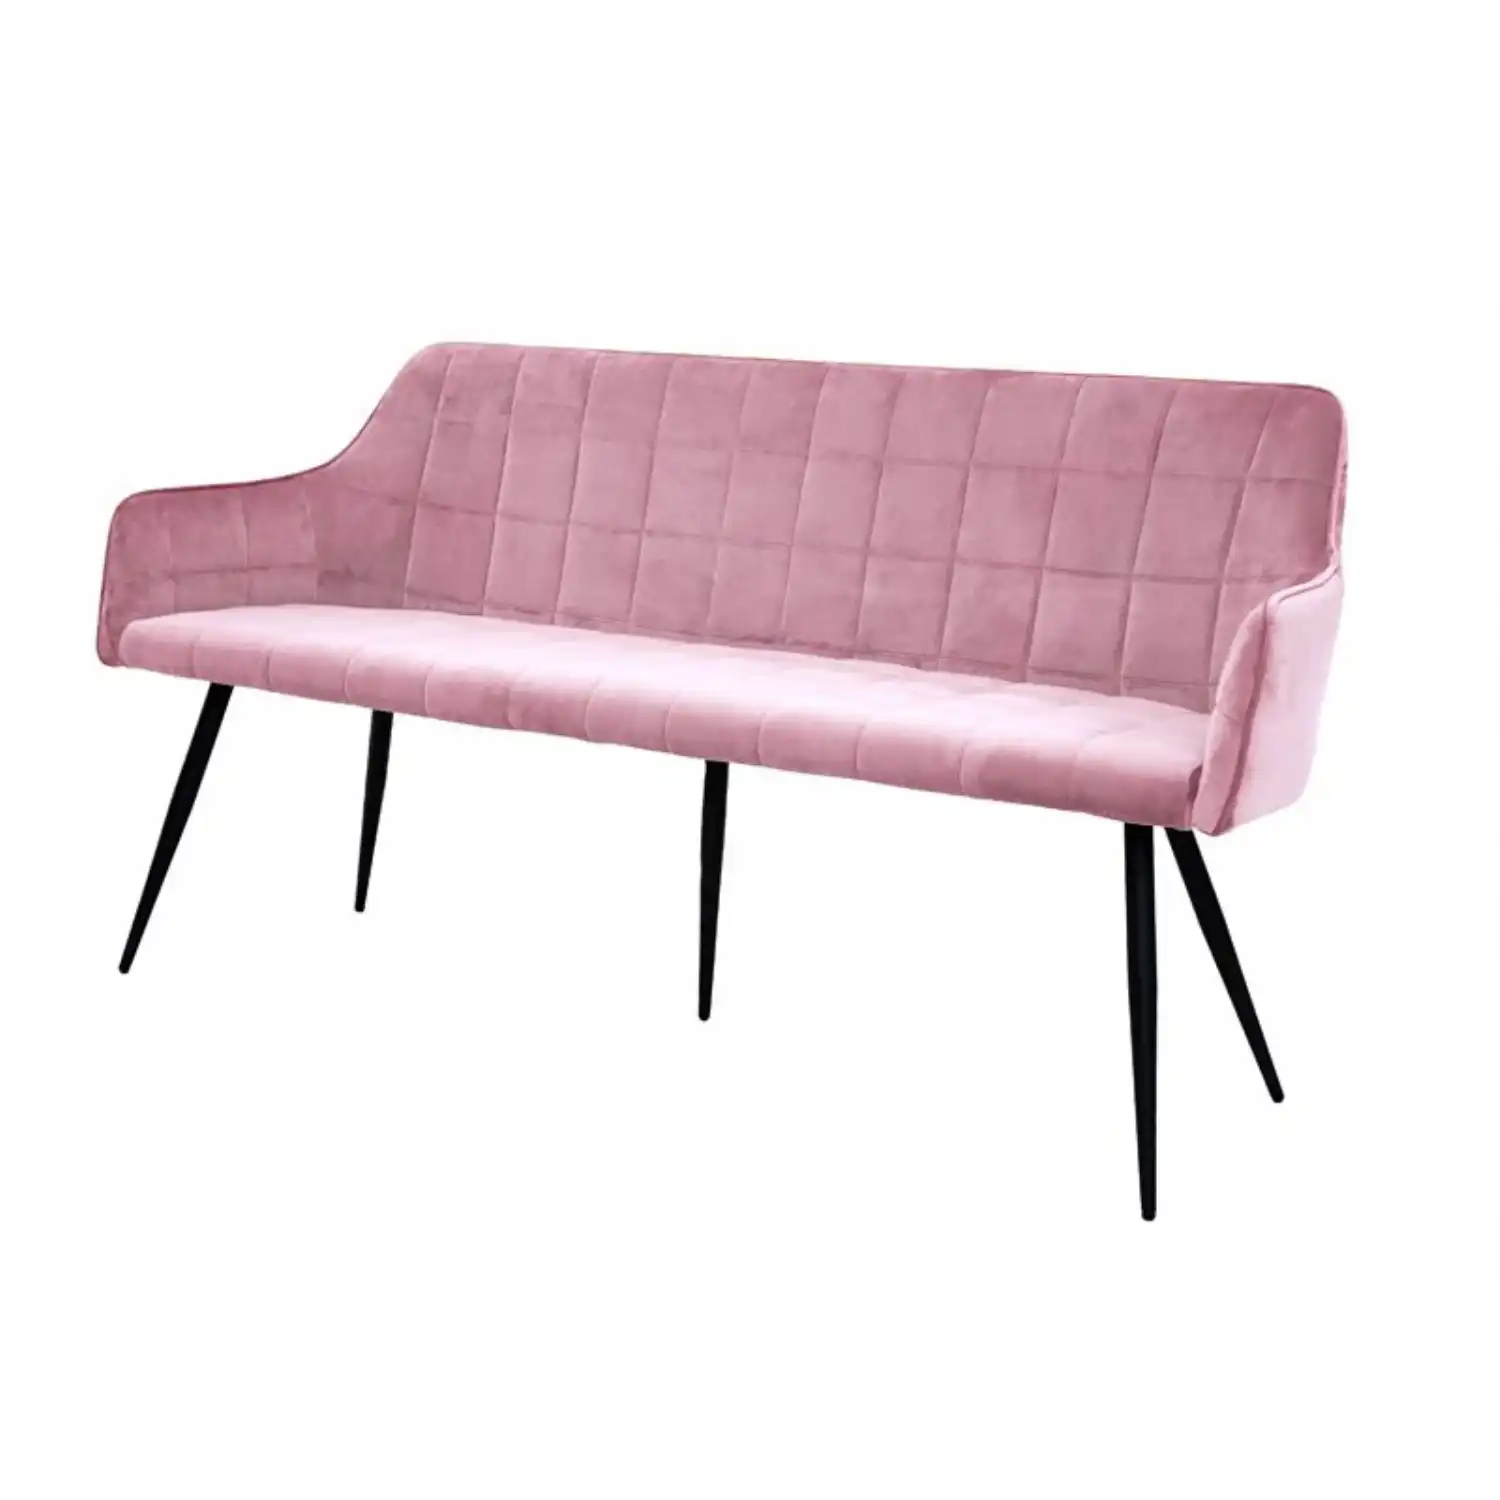 Pink Velvet Fabric Upholstered Dining Bench 160cm Wide